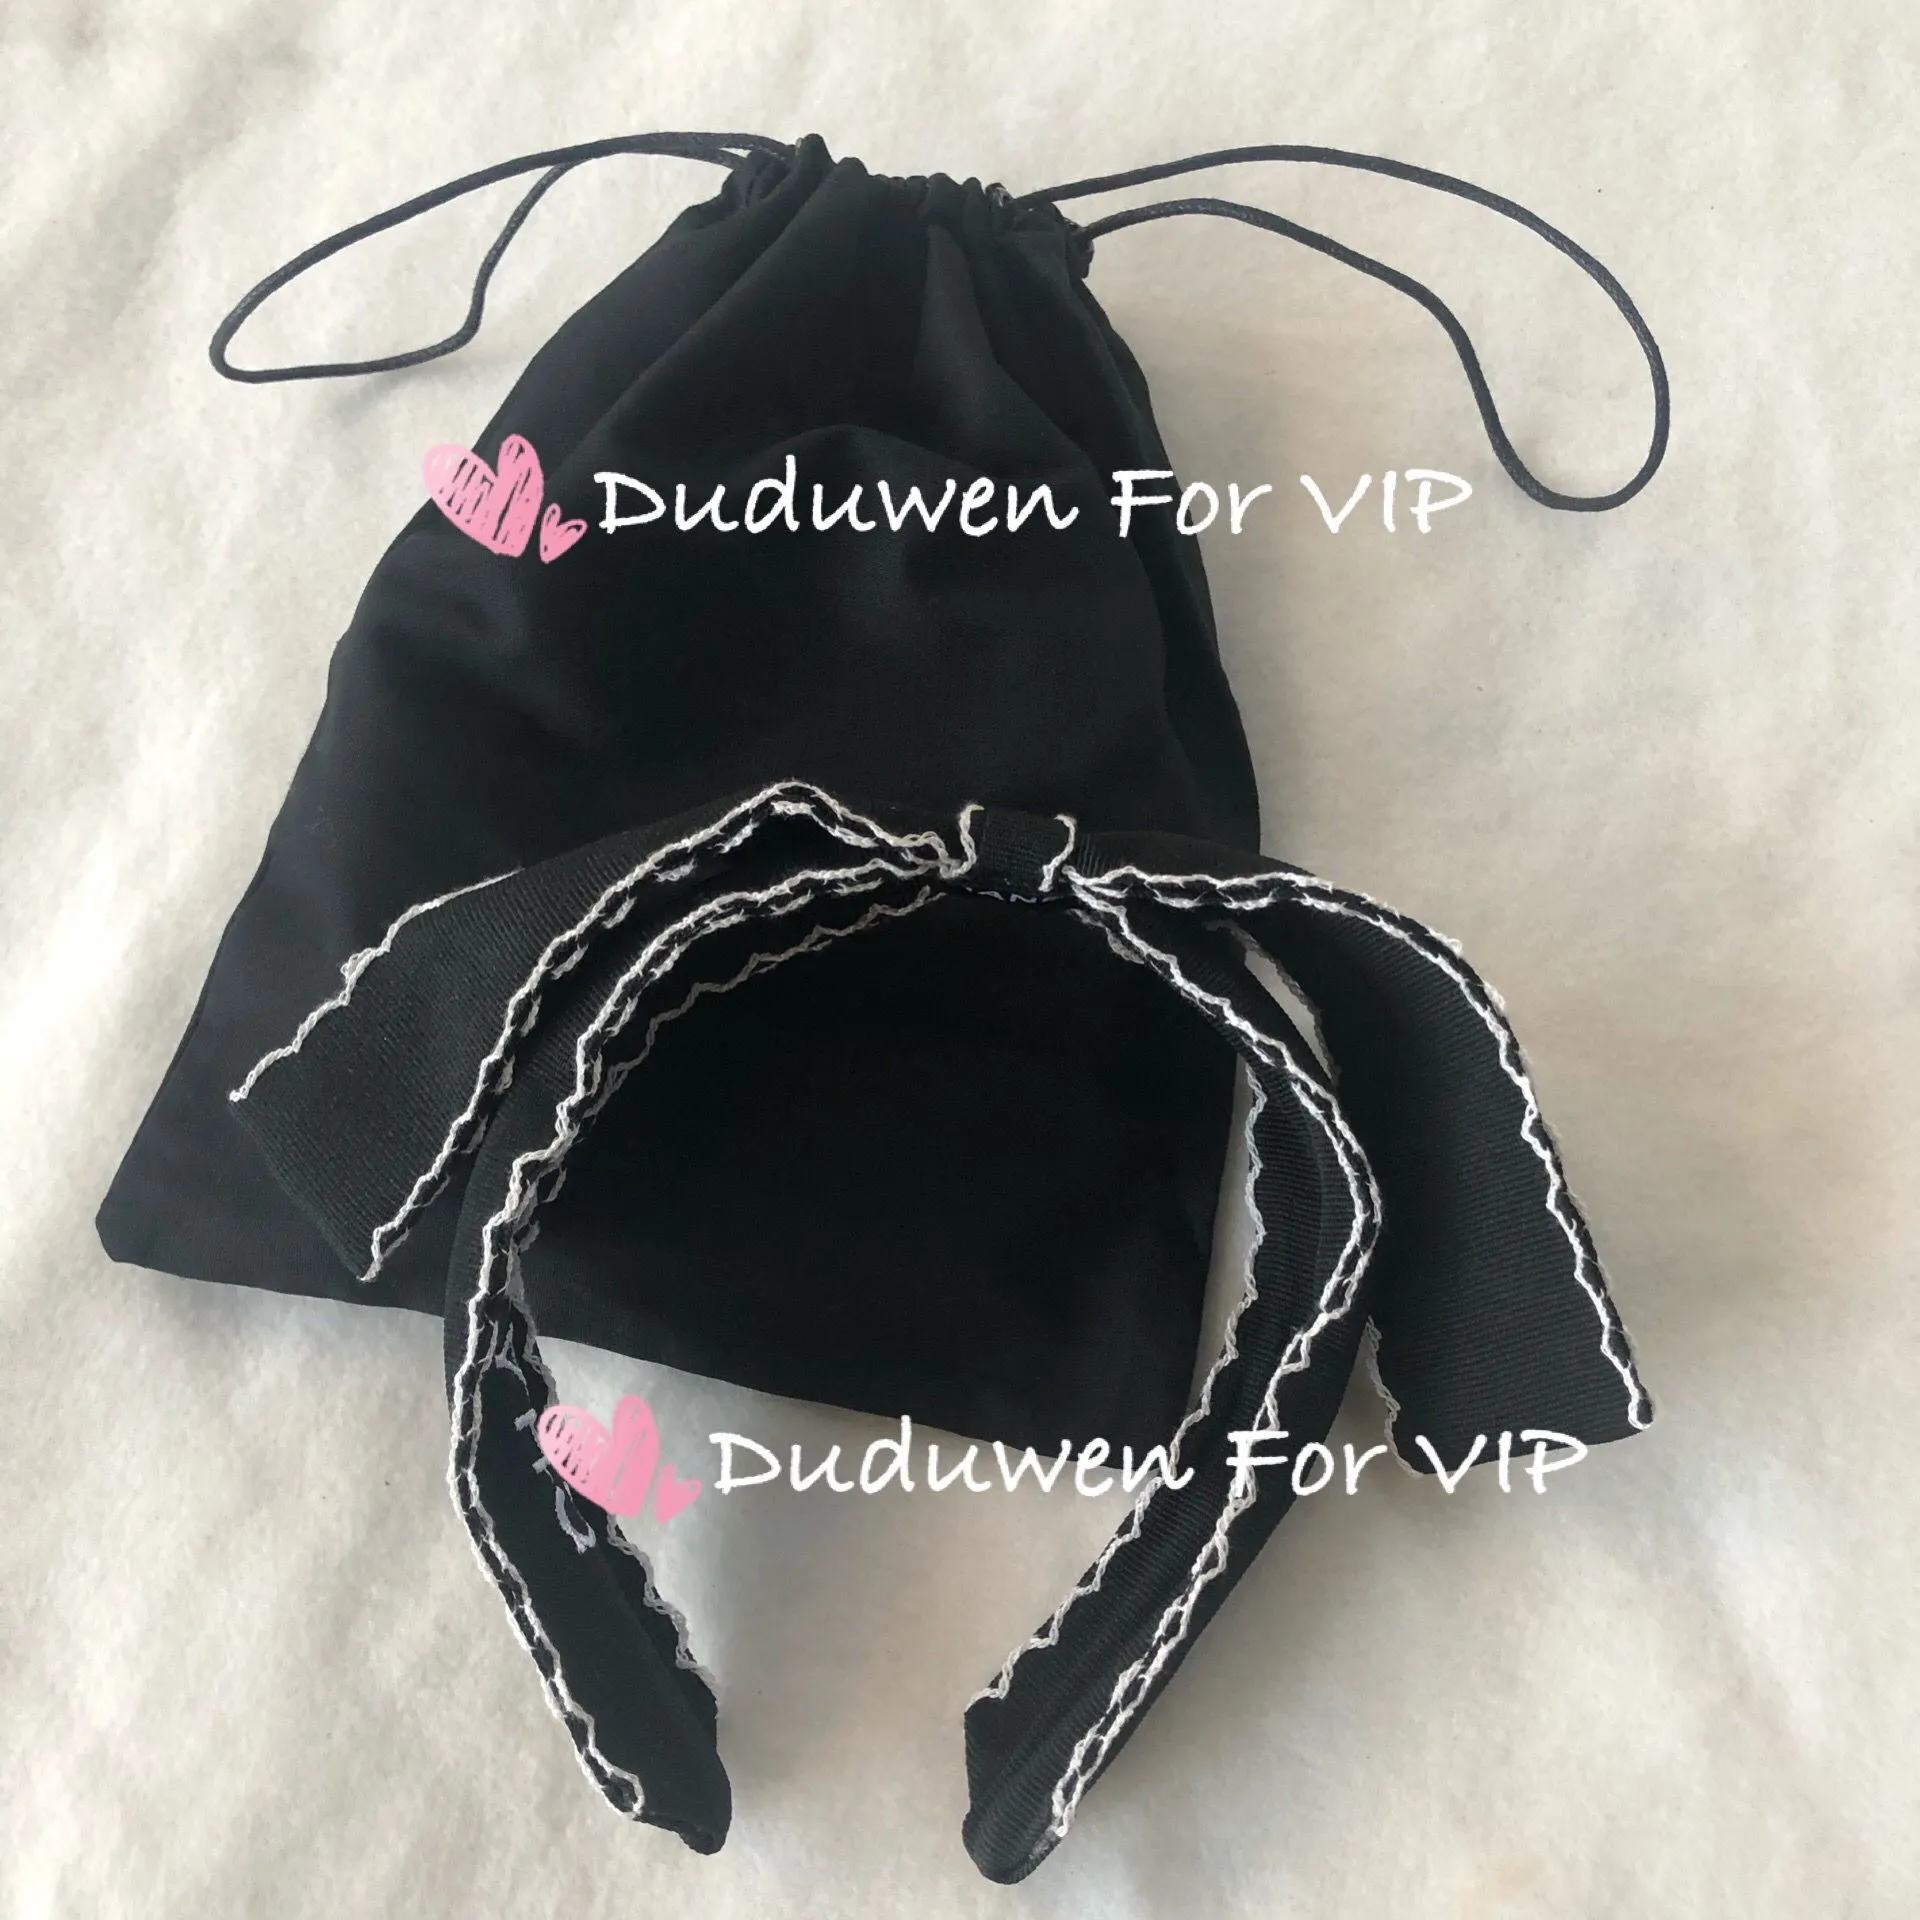 Moda Acessórios De Cabelo Ribbion Bowknot Headband Bordado Clássico Pano Headband Presente de festa de festa de cabelos clássicos com saco de poeira Duduvip